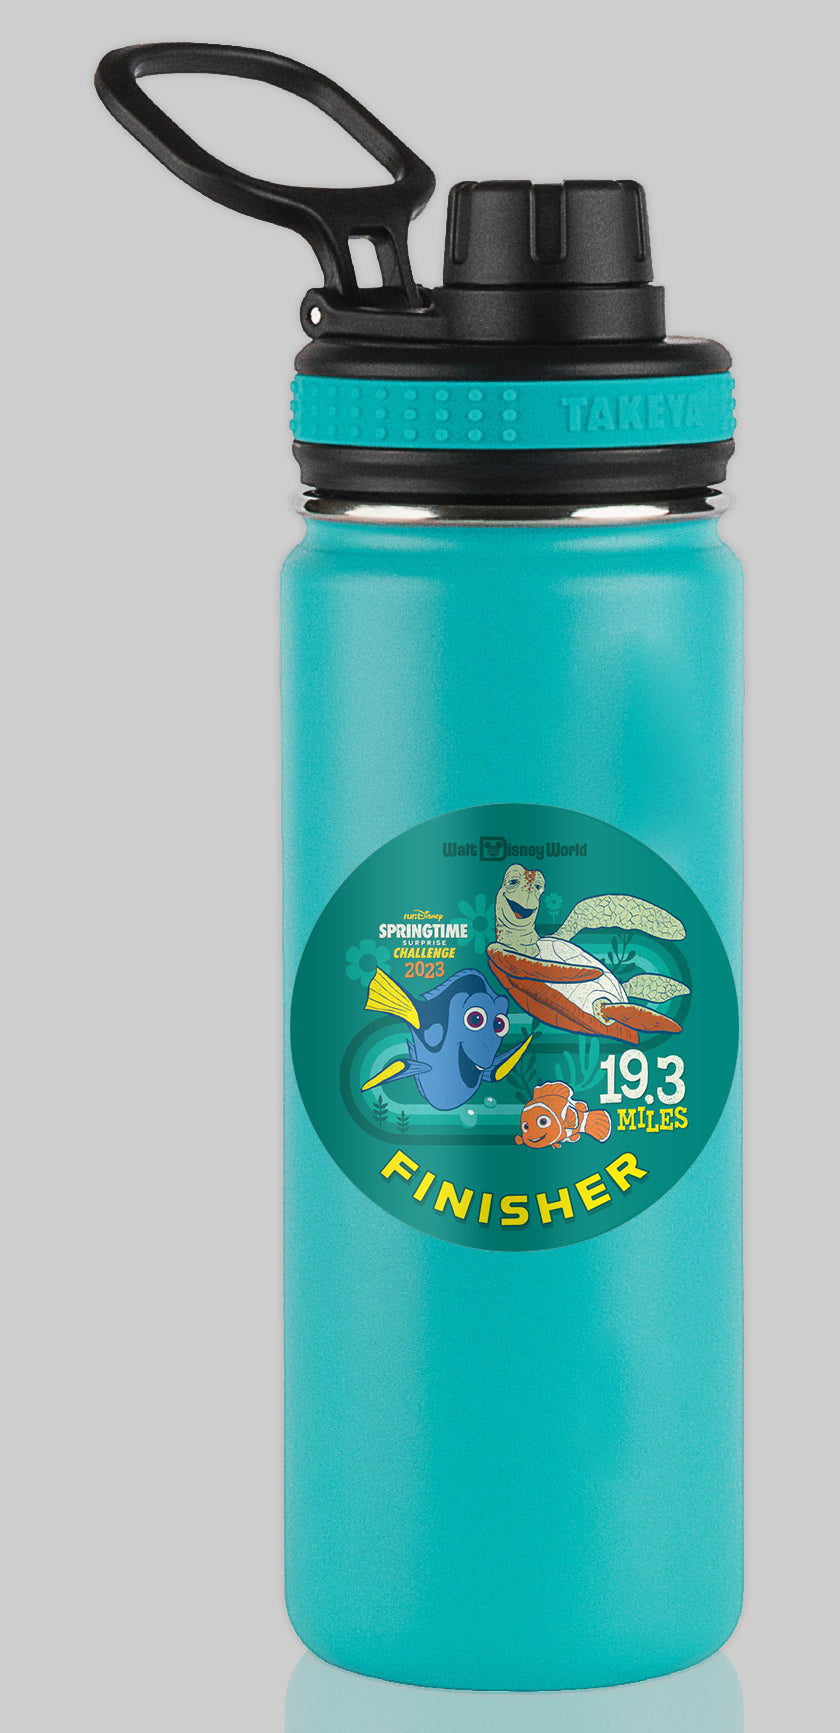 RunDisney Springtime Races 2023 Challenge 19.3 Miles FINISHER Water Bottle Mug Sticker